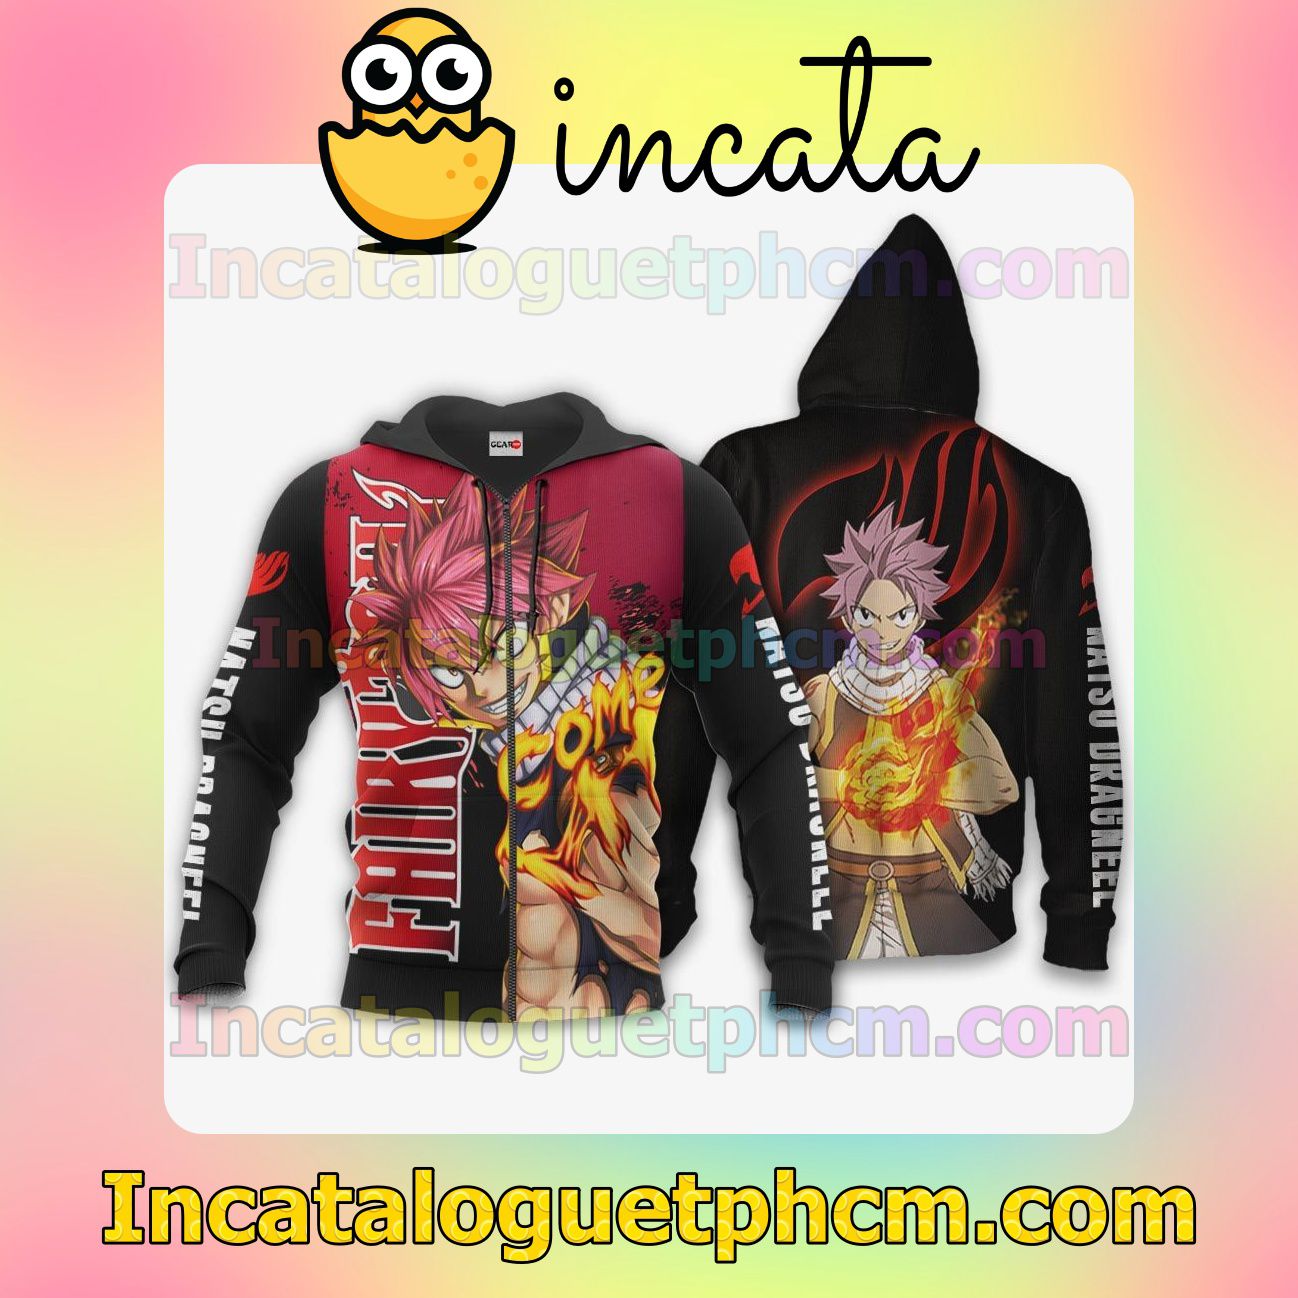 Natsu Dragneel Fairy Tail Anime Clothing Merch Zip Hoodie Jacket Shirts